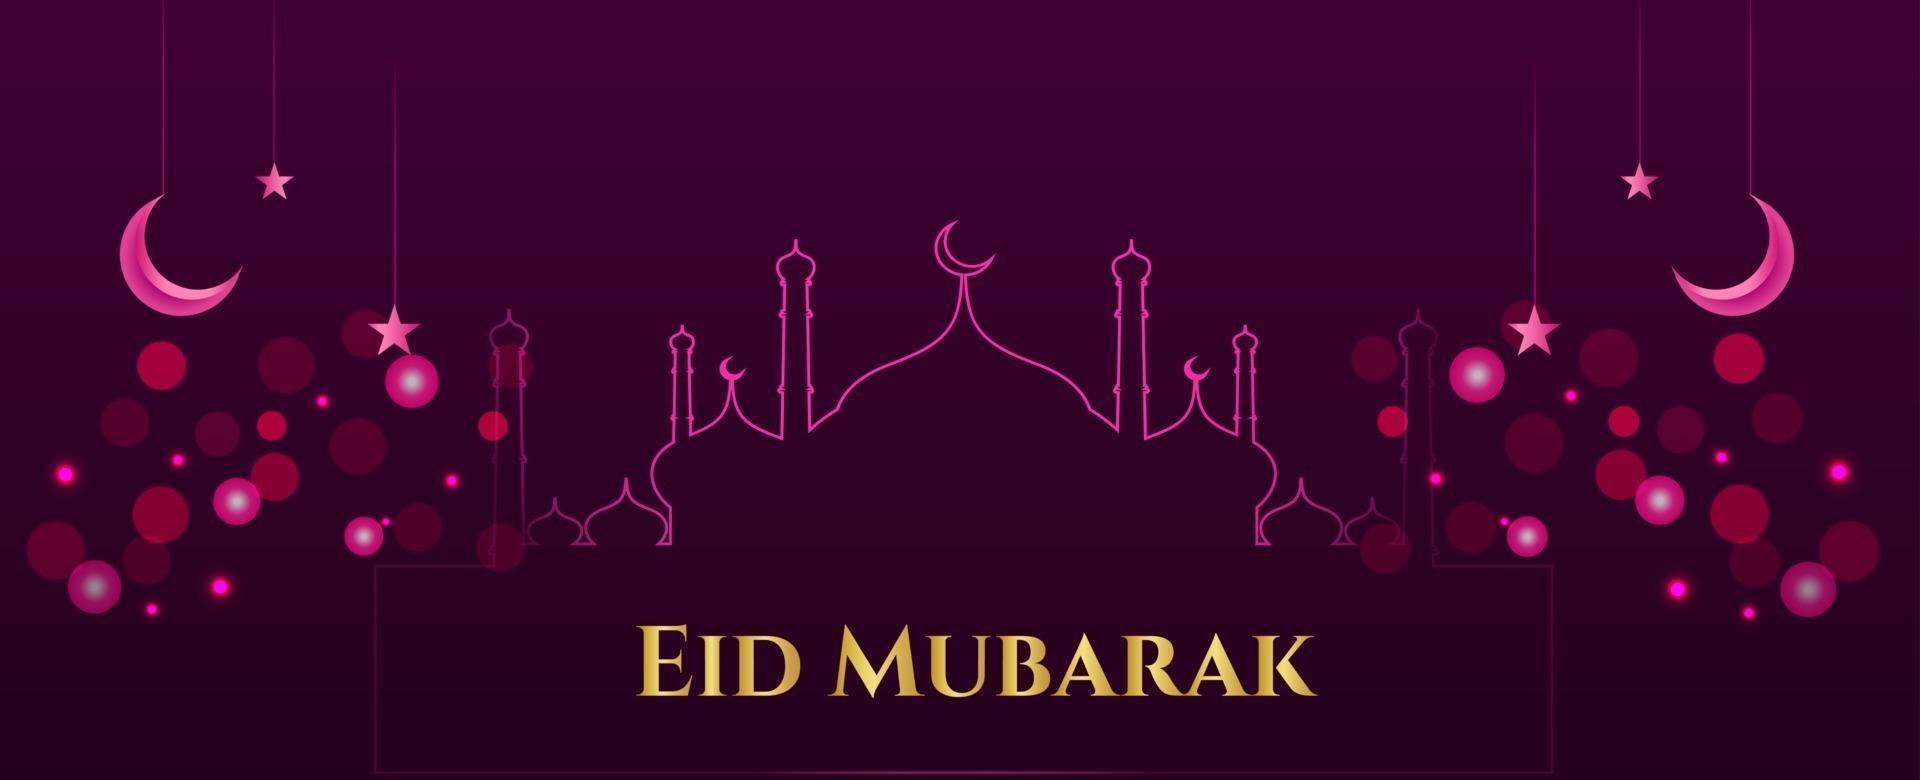 fondo decorativo del festival eid mubarak vector